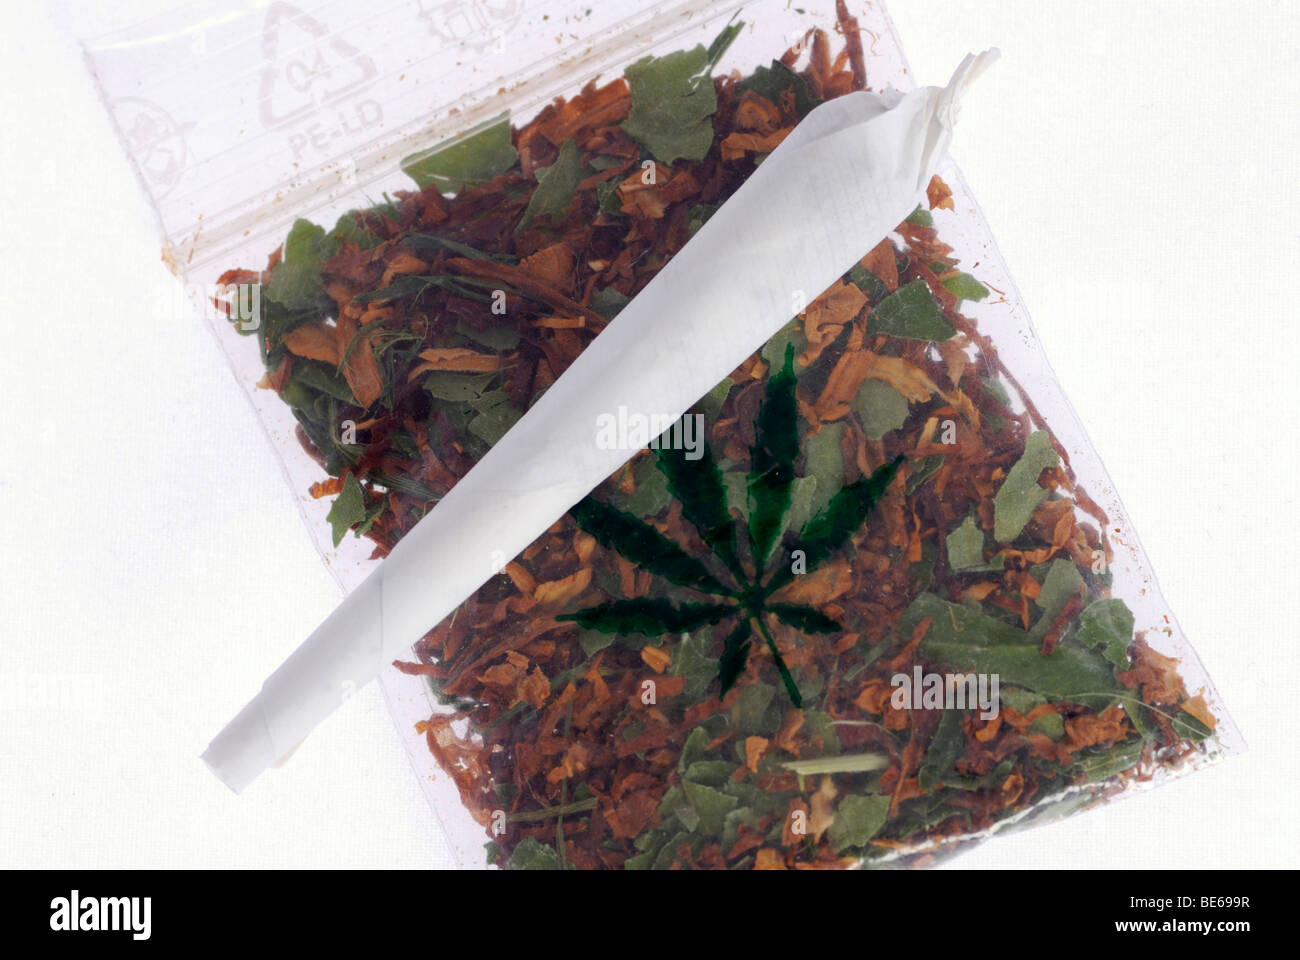 Joint and marijuana bag Stock Photo